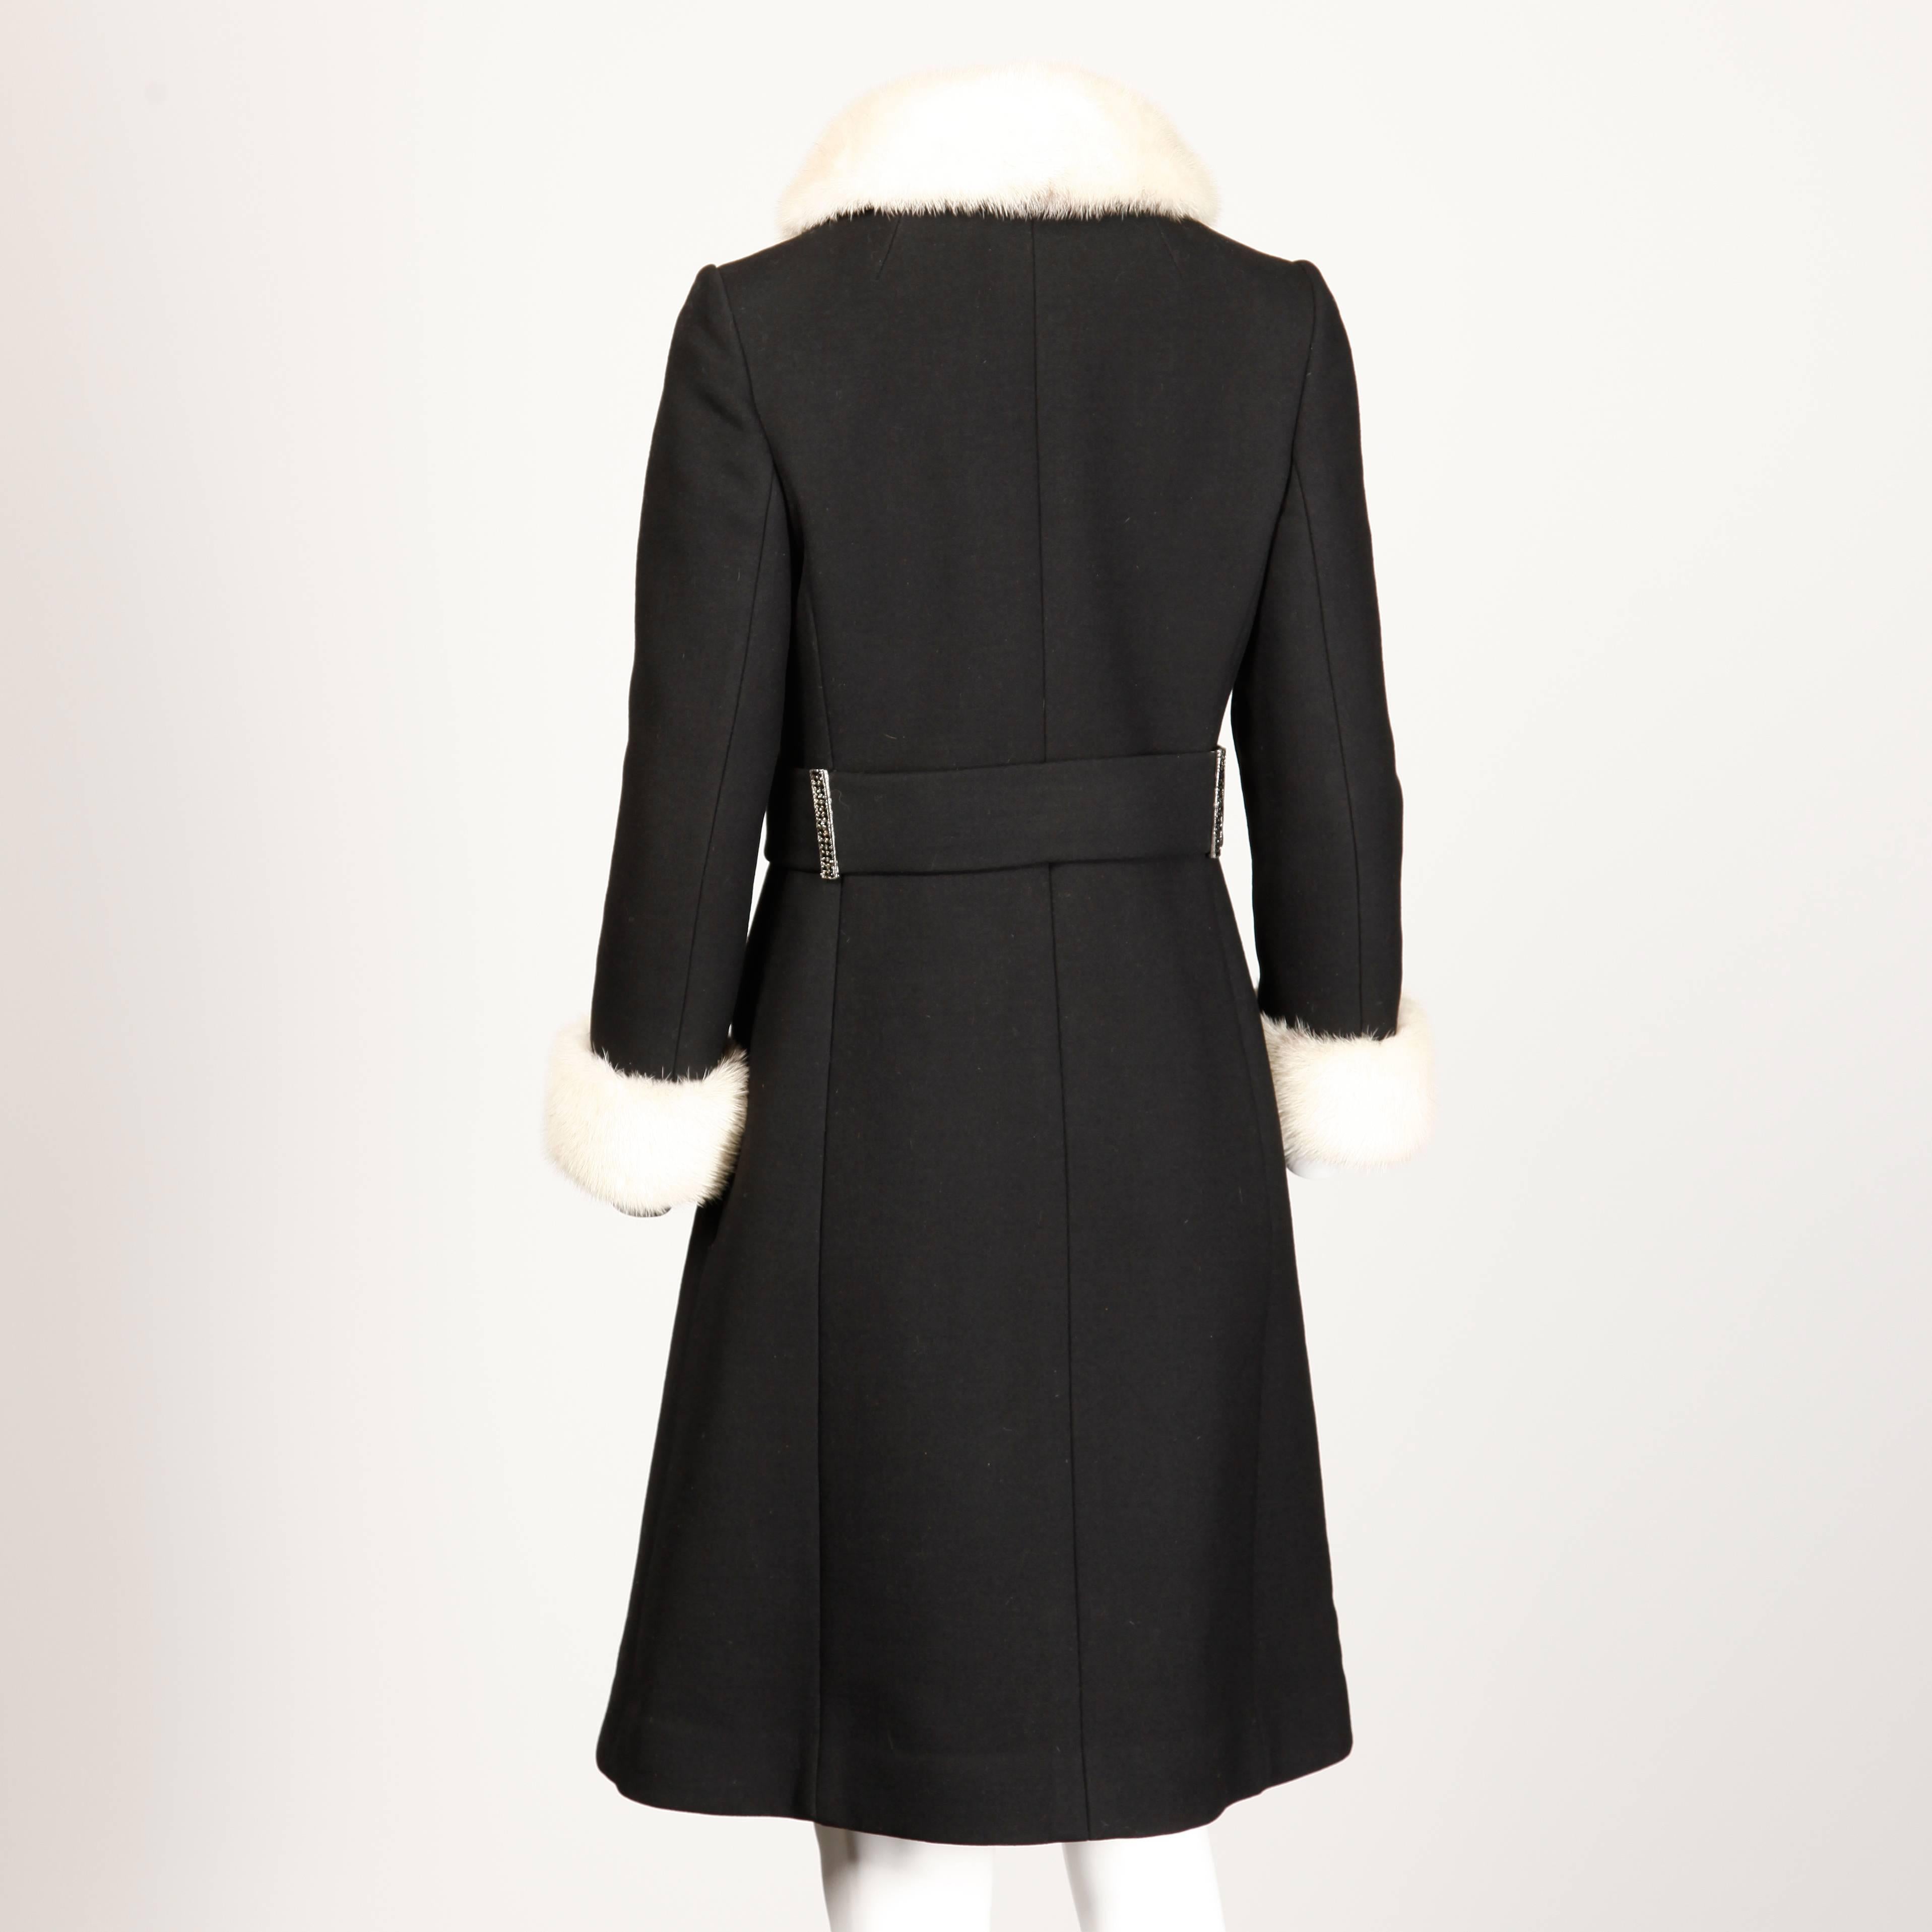 Women's 1960s Vintage Black Wool Coat with Cross Mink Fur Trim Cuffs + Collar